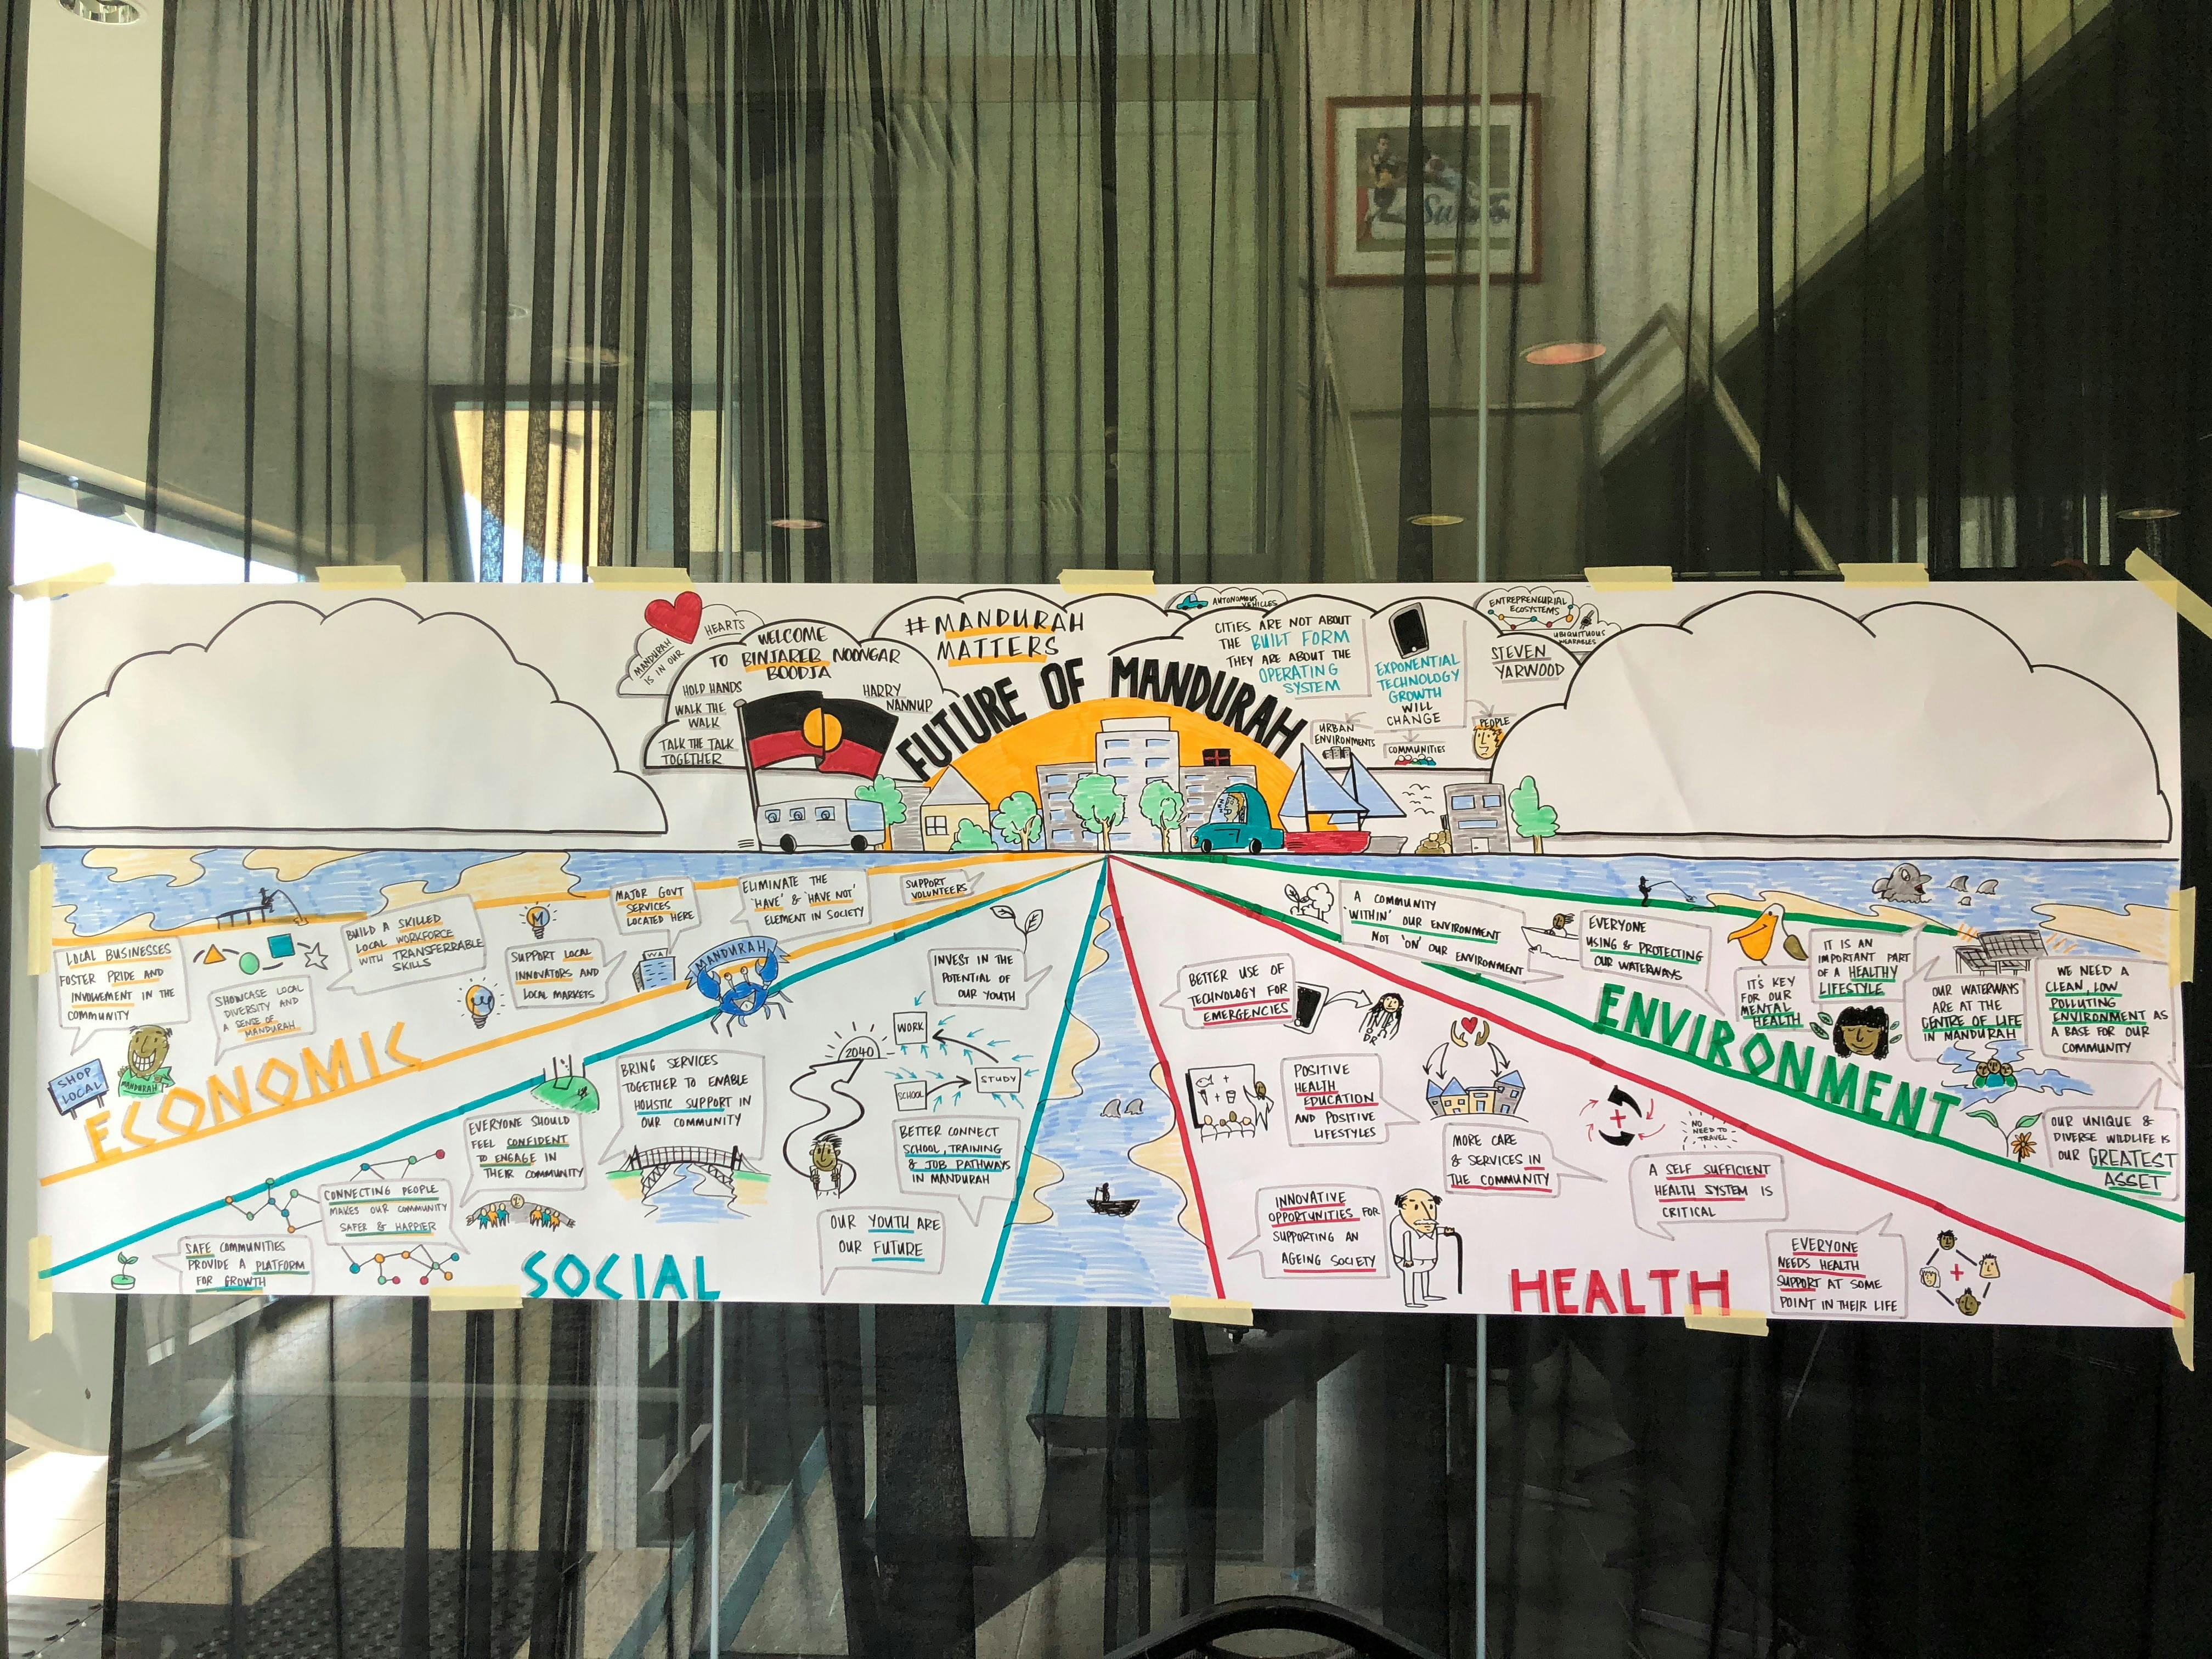 2019 Mandurah Matters Summit - Visual Facilitation